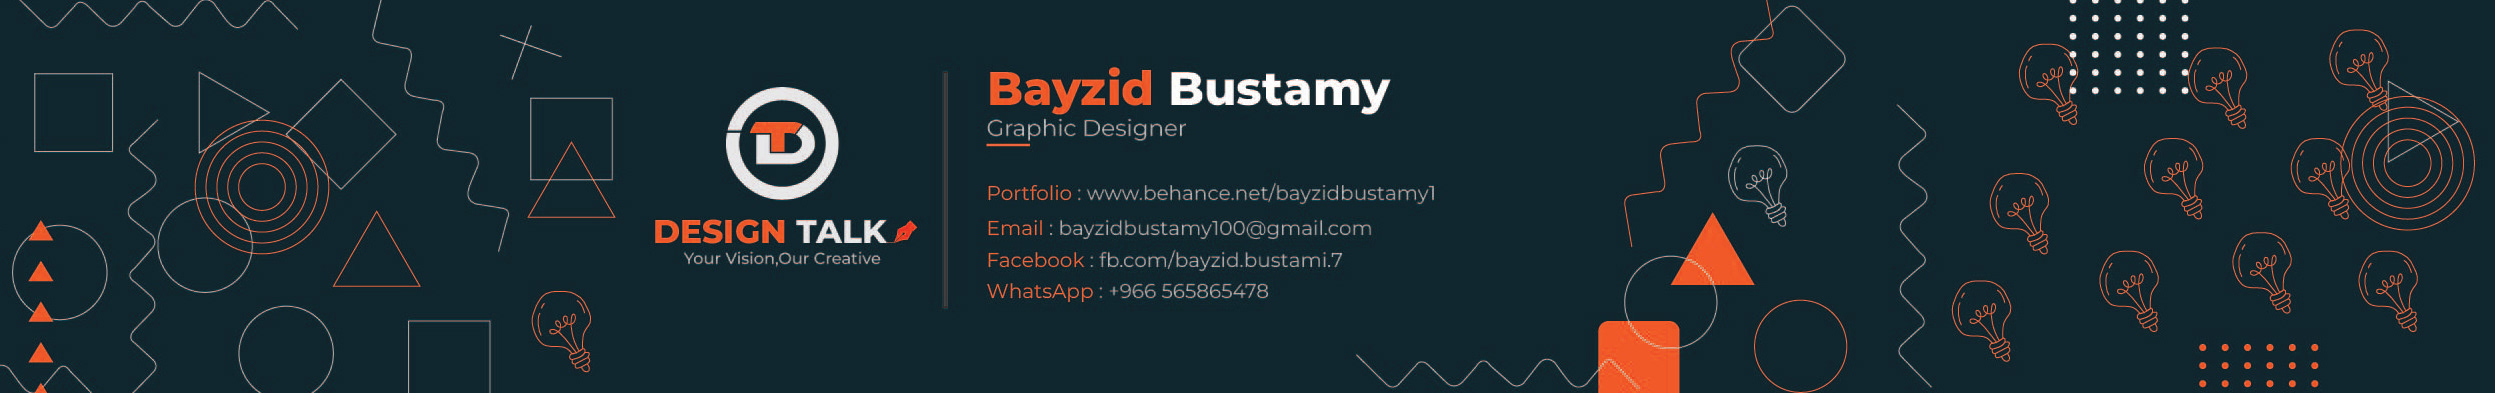 Bayzid Bustamy's profile banner